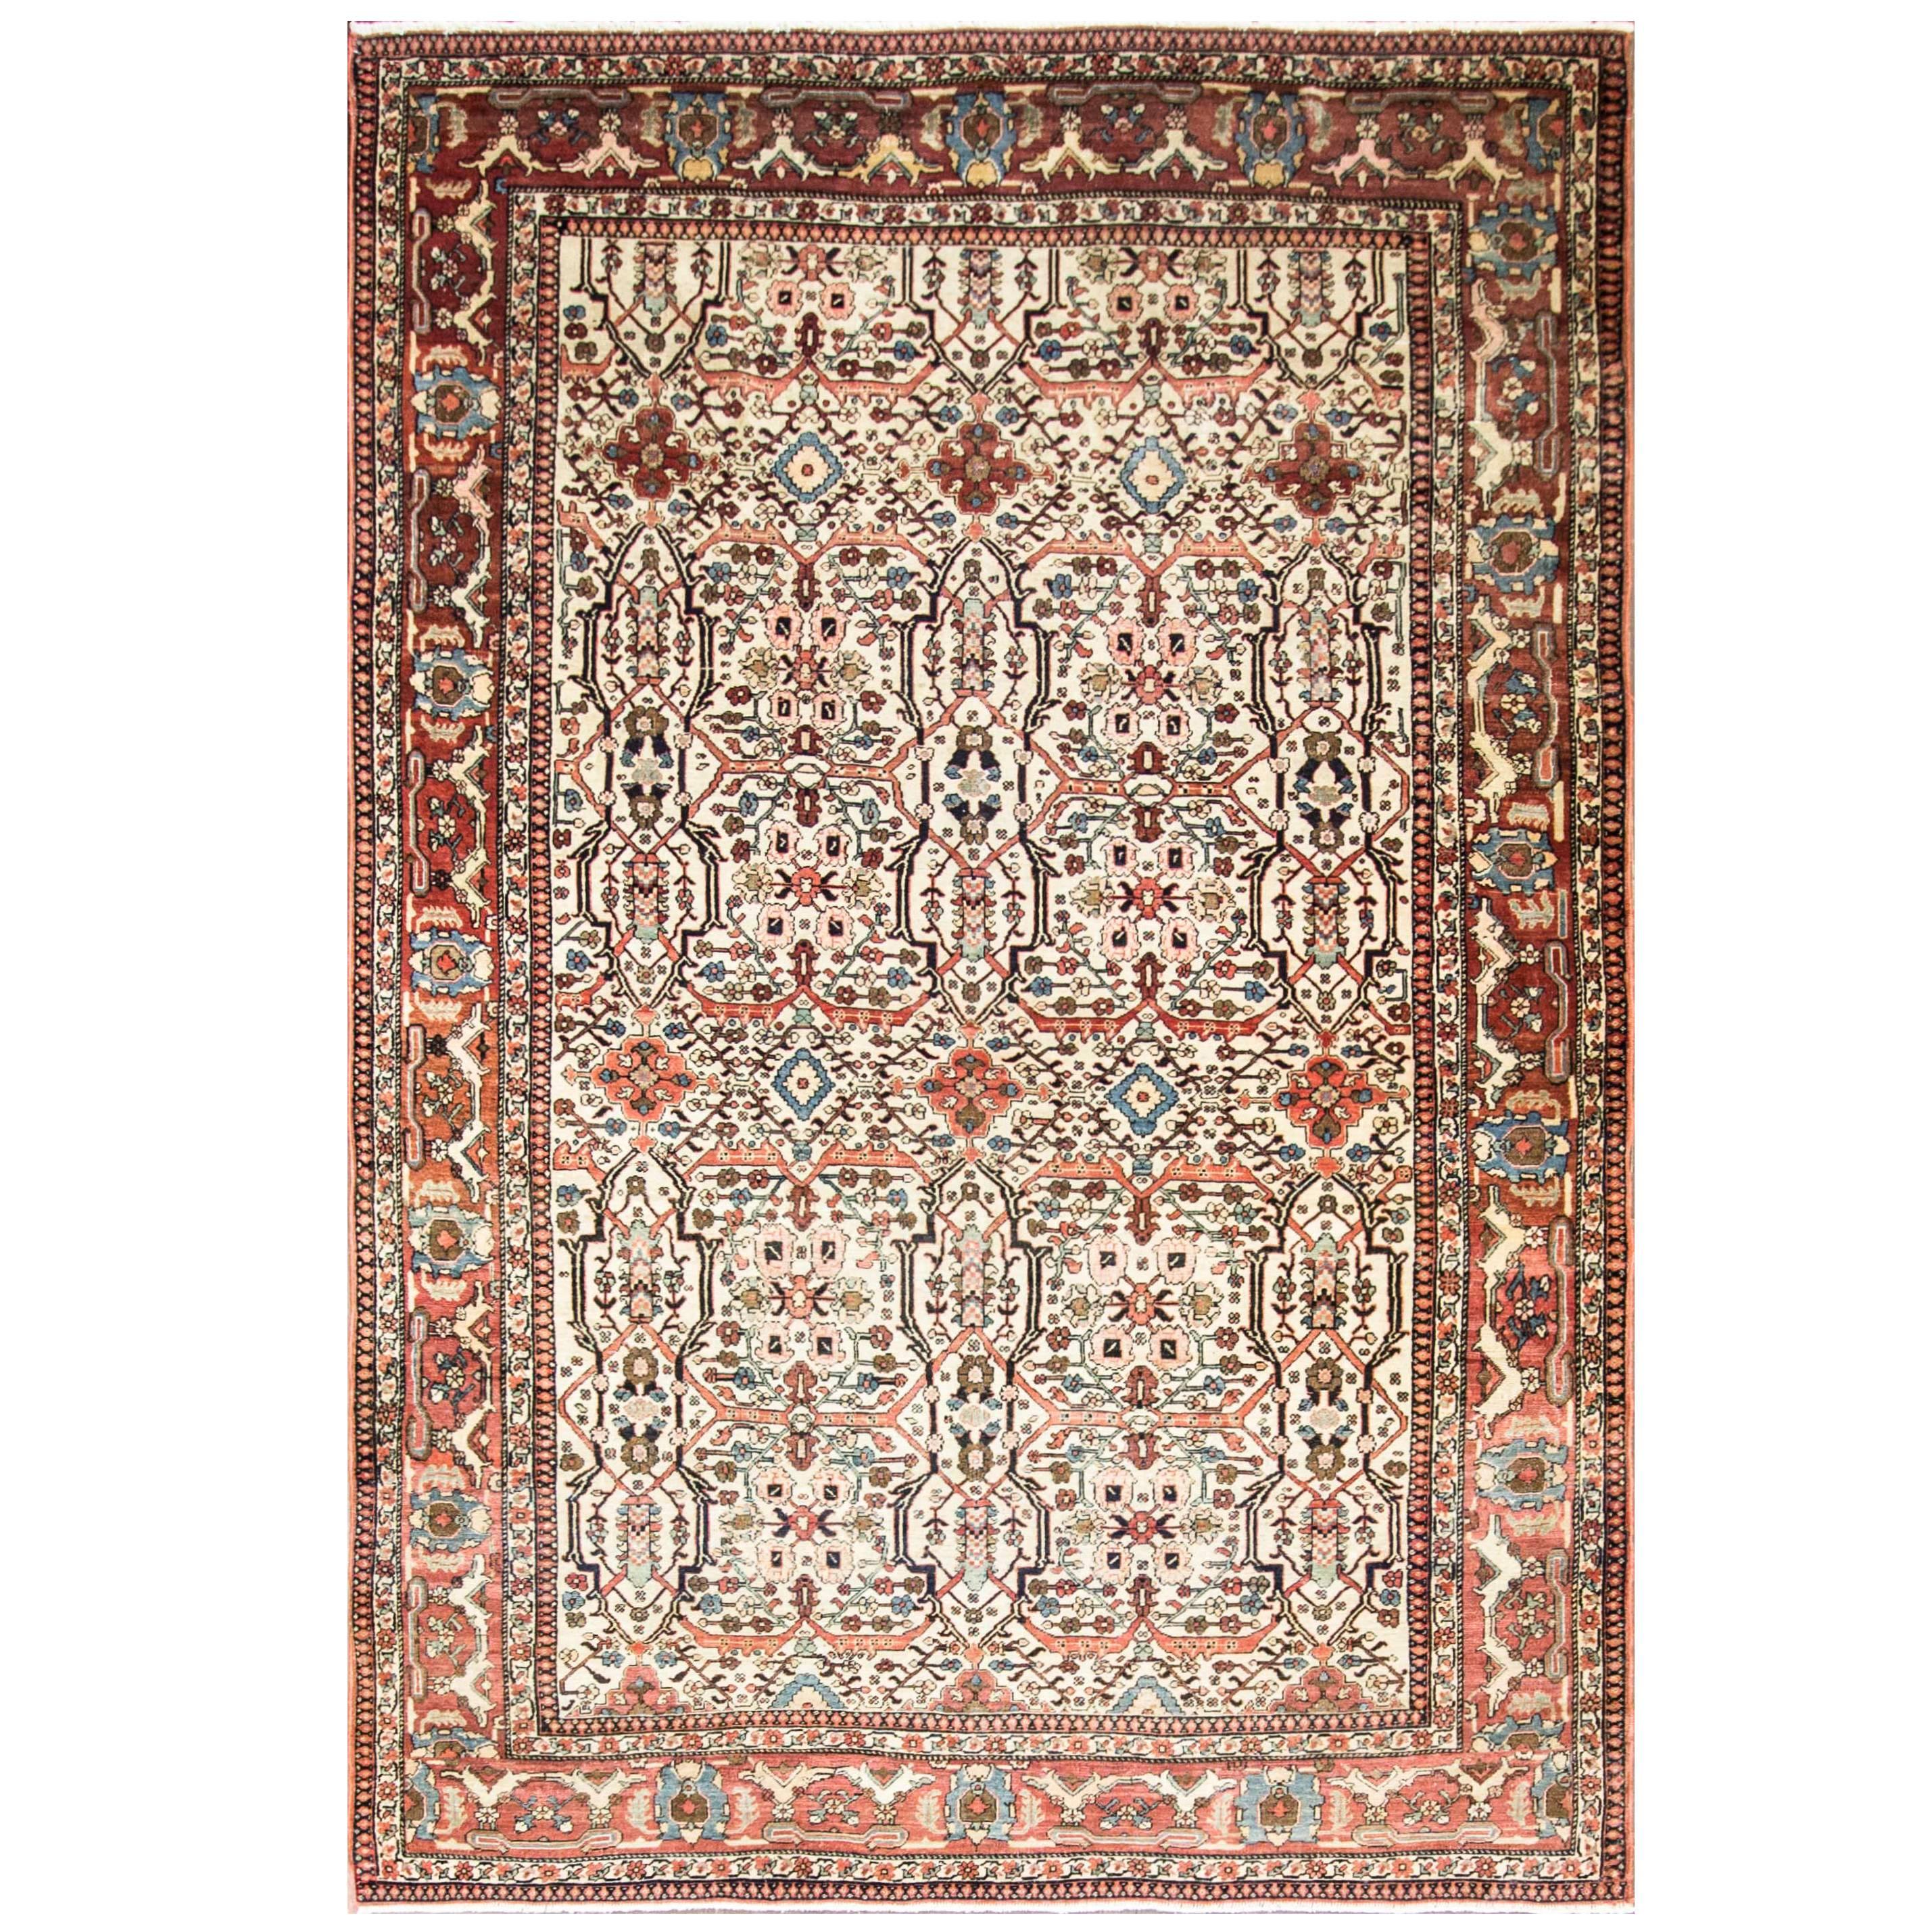 Antique Persian Feraghan Sarouk Carpet, 6'8" x 10'1"